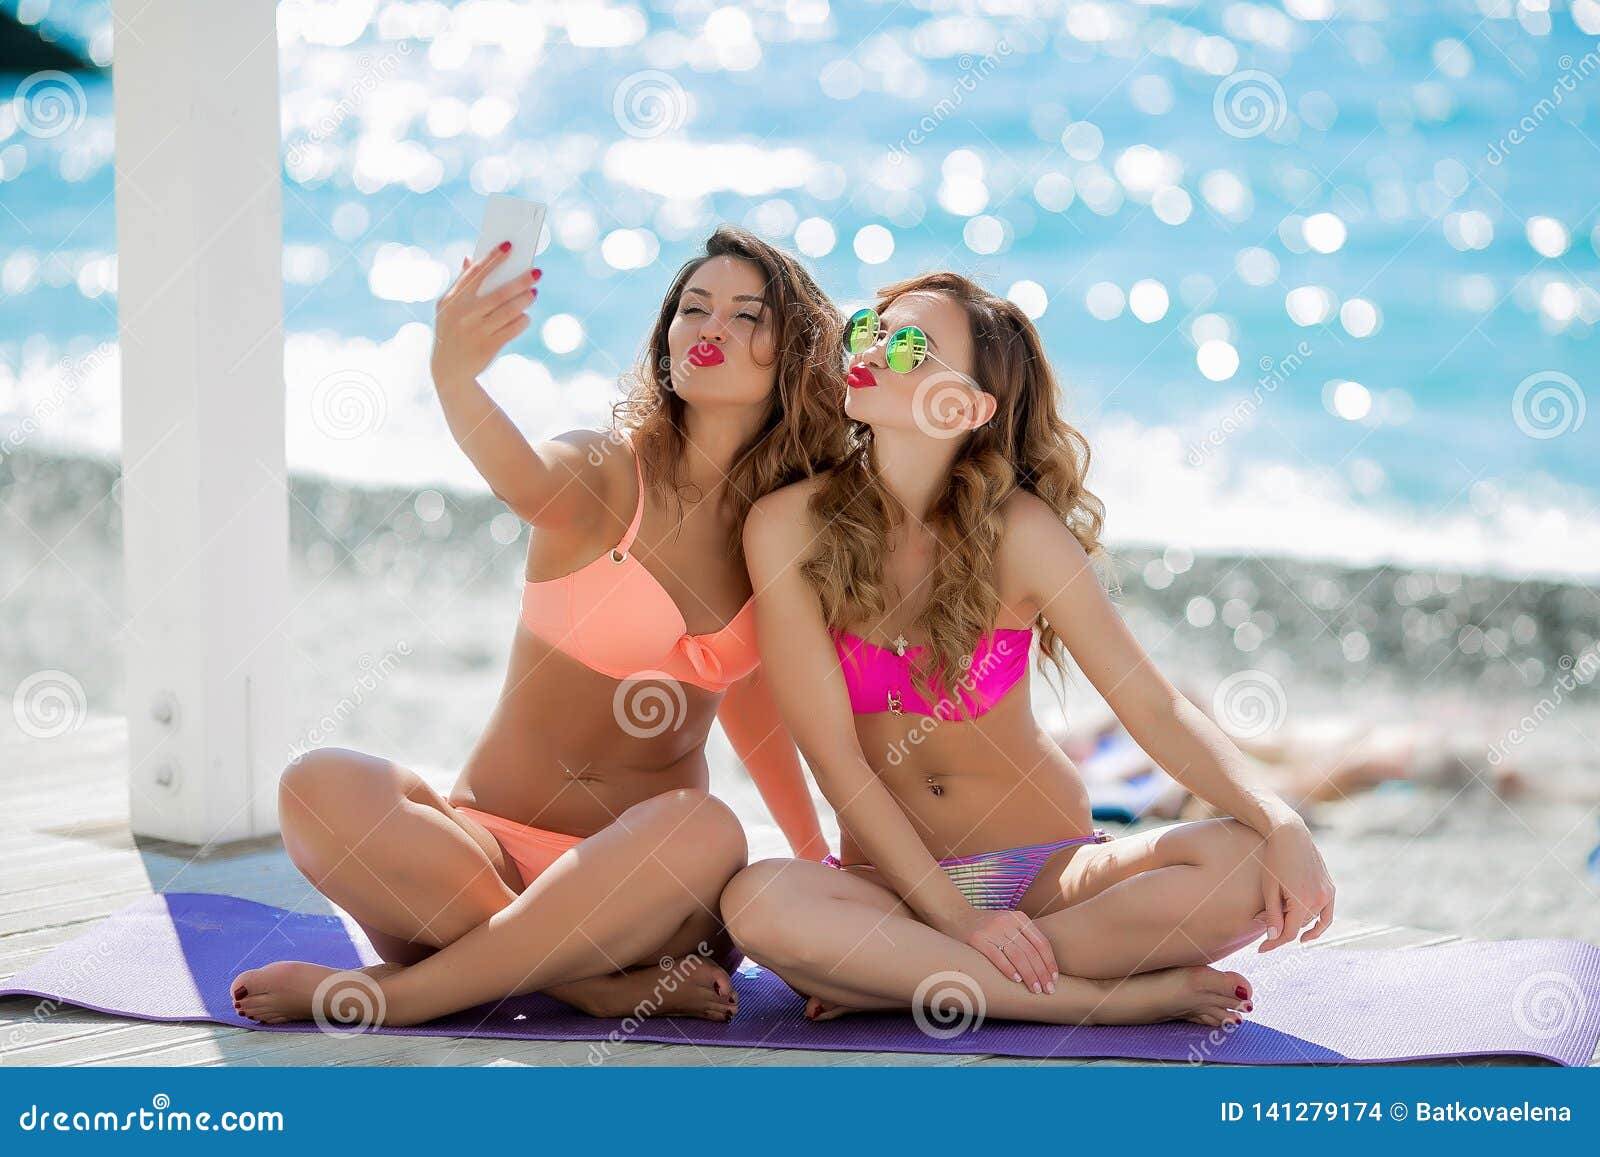 Sexual Girl in a Bright Bikini on a Sunny Beach